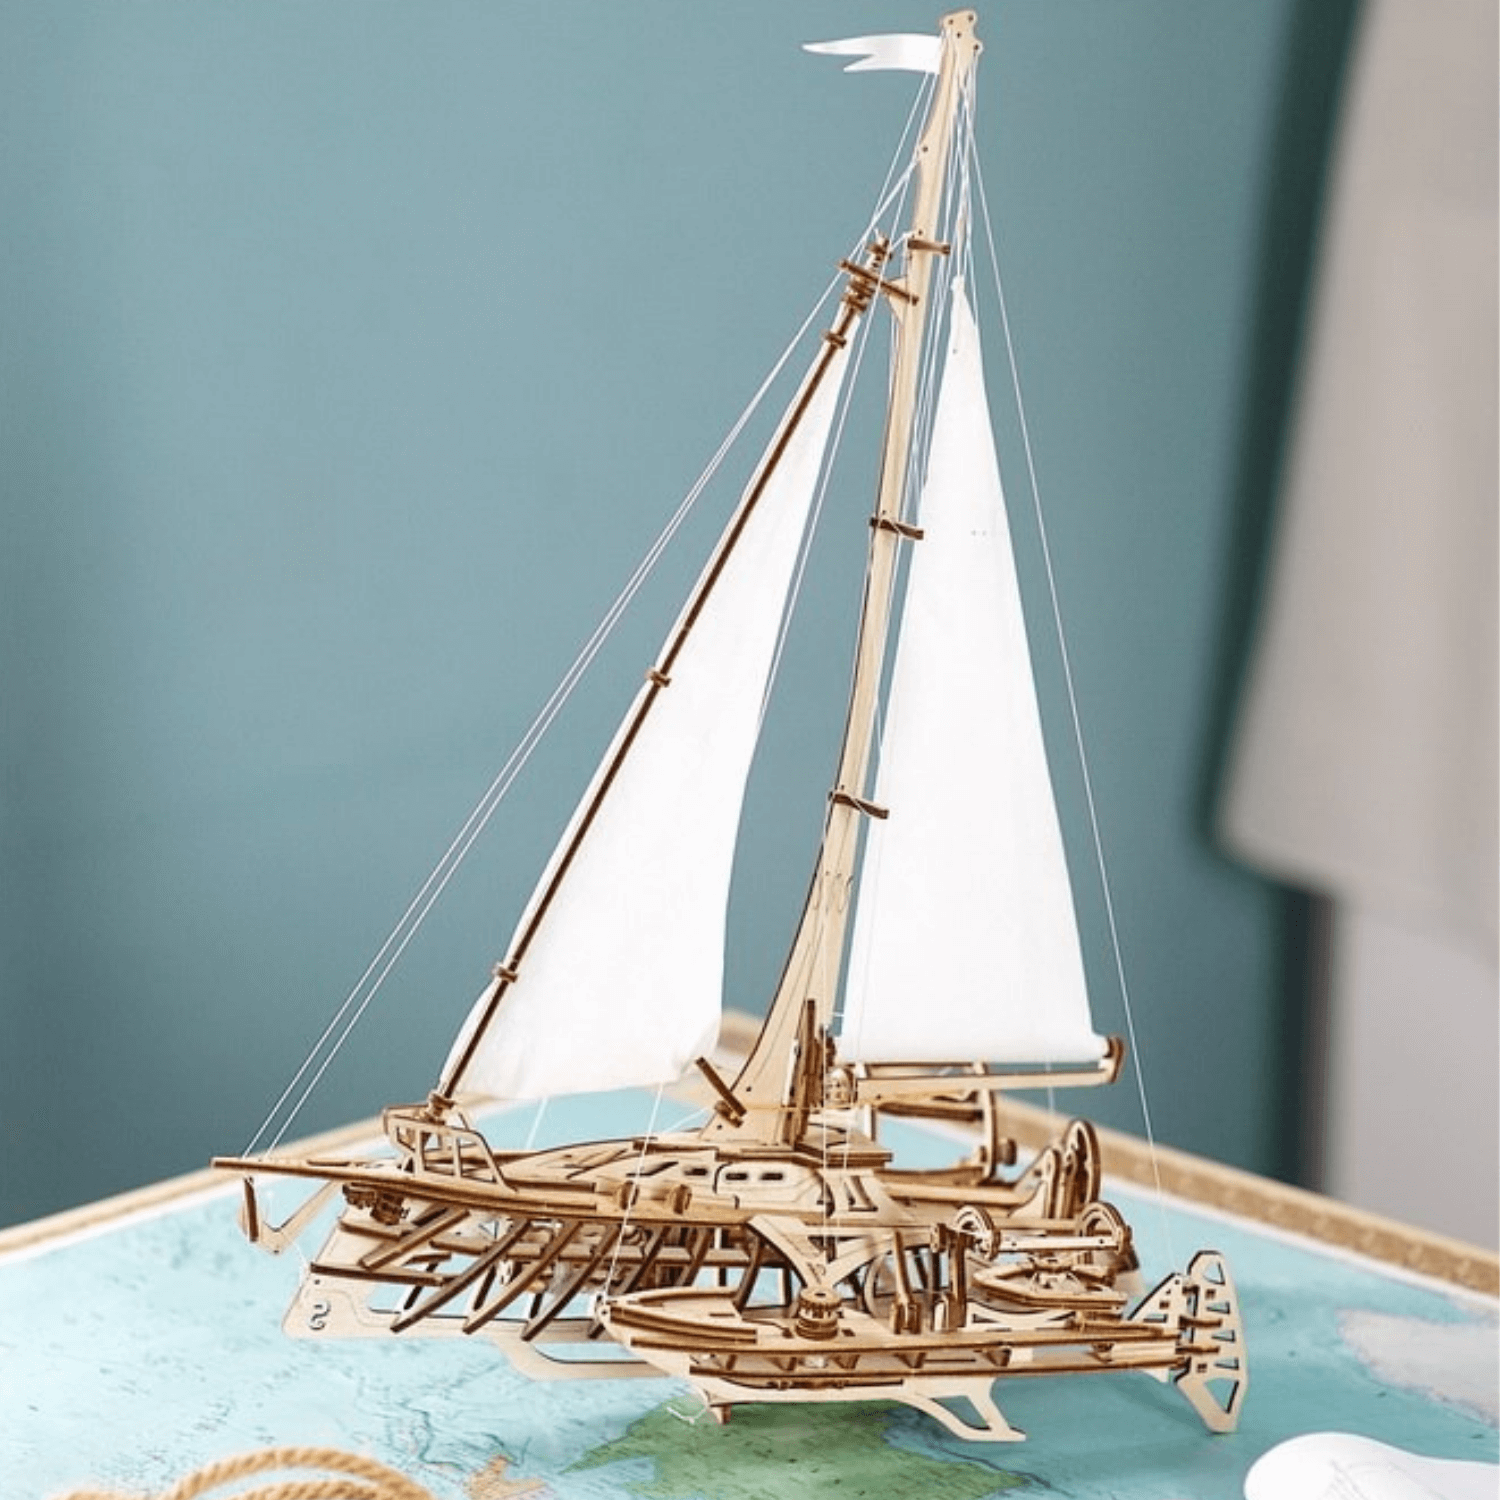 Trimaran Merihobus sailing ship